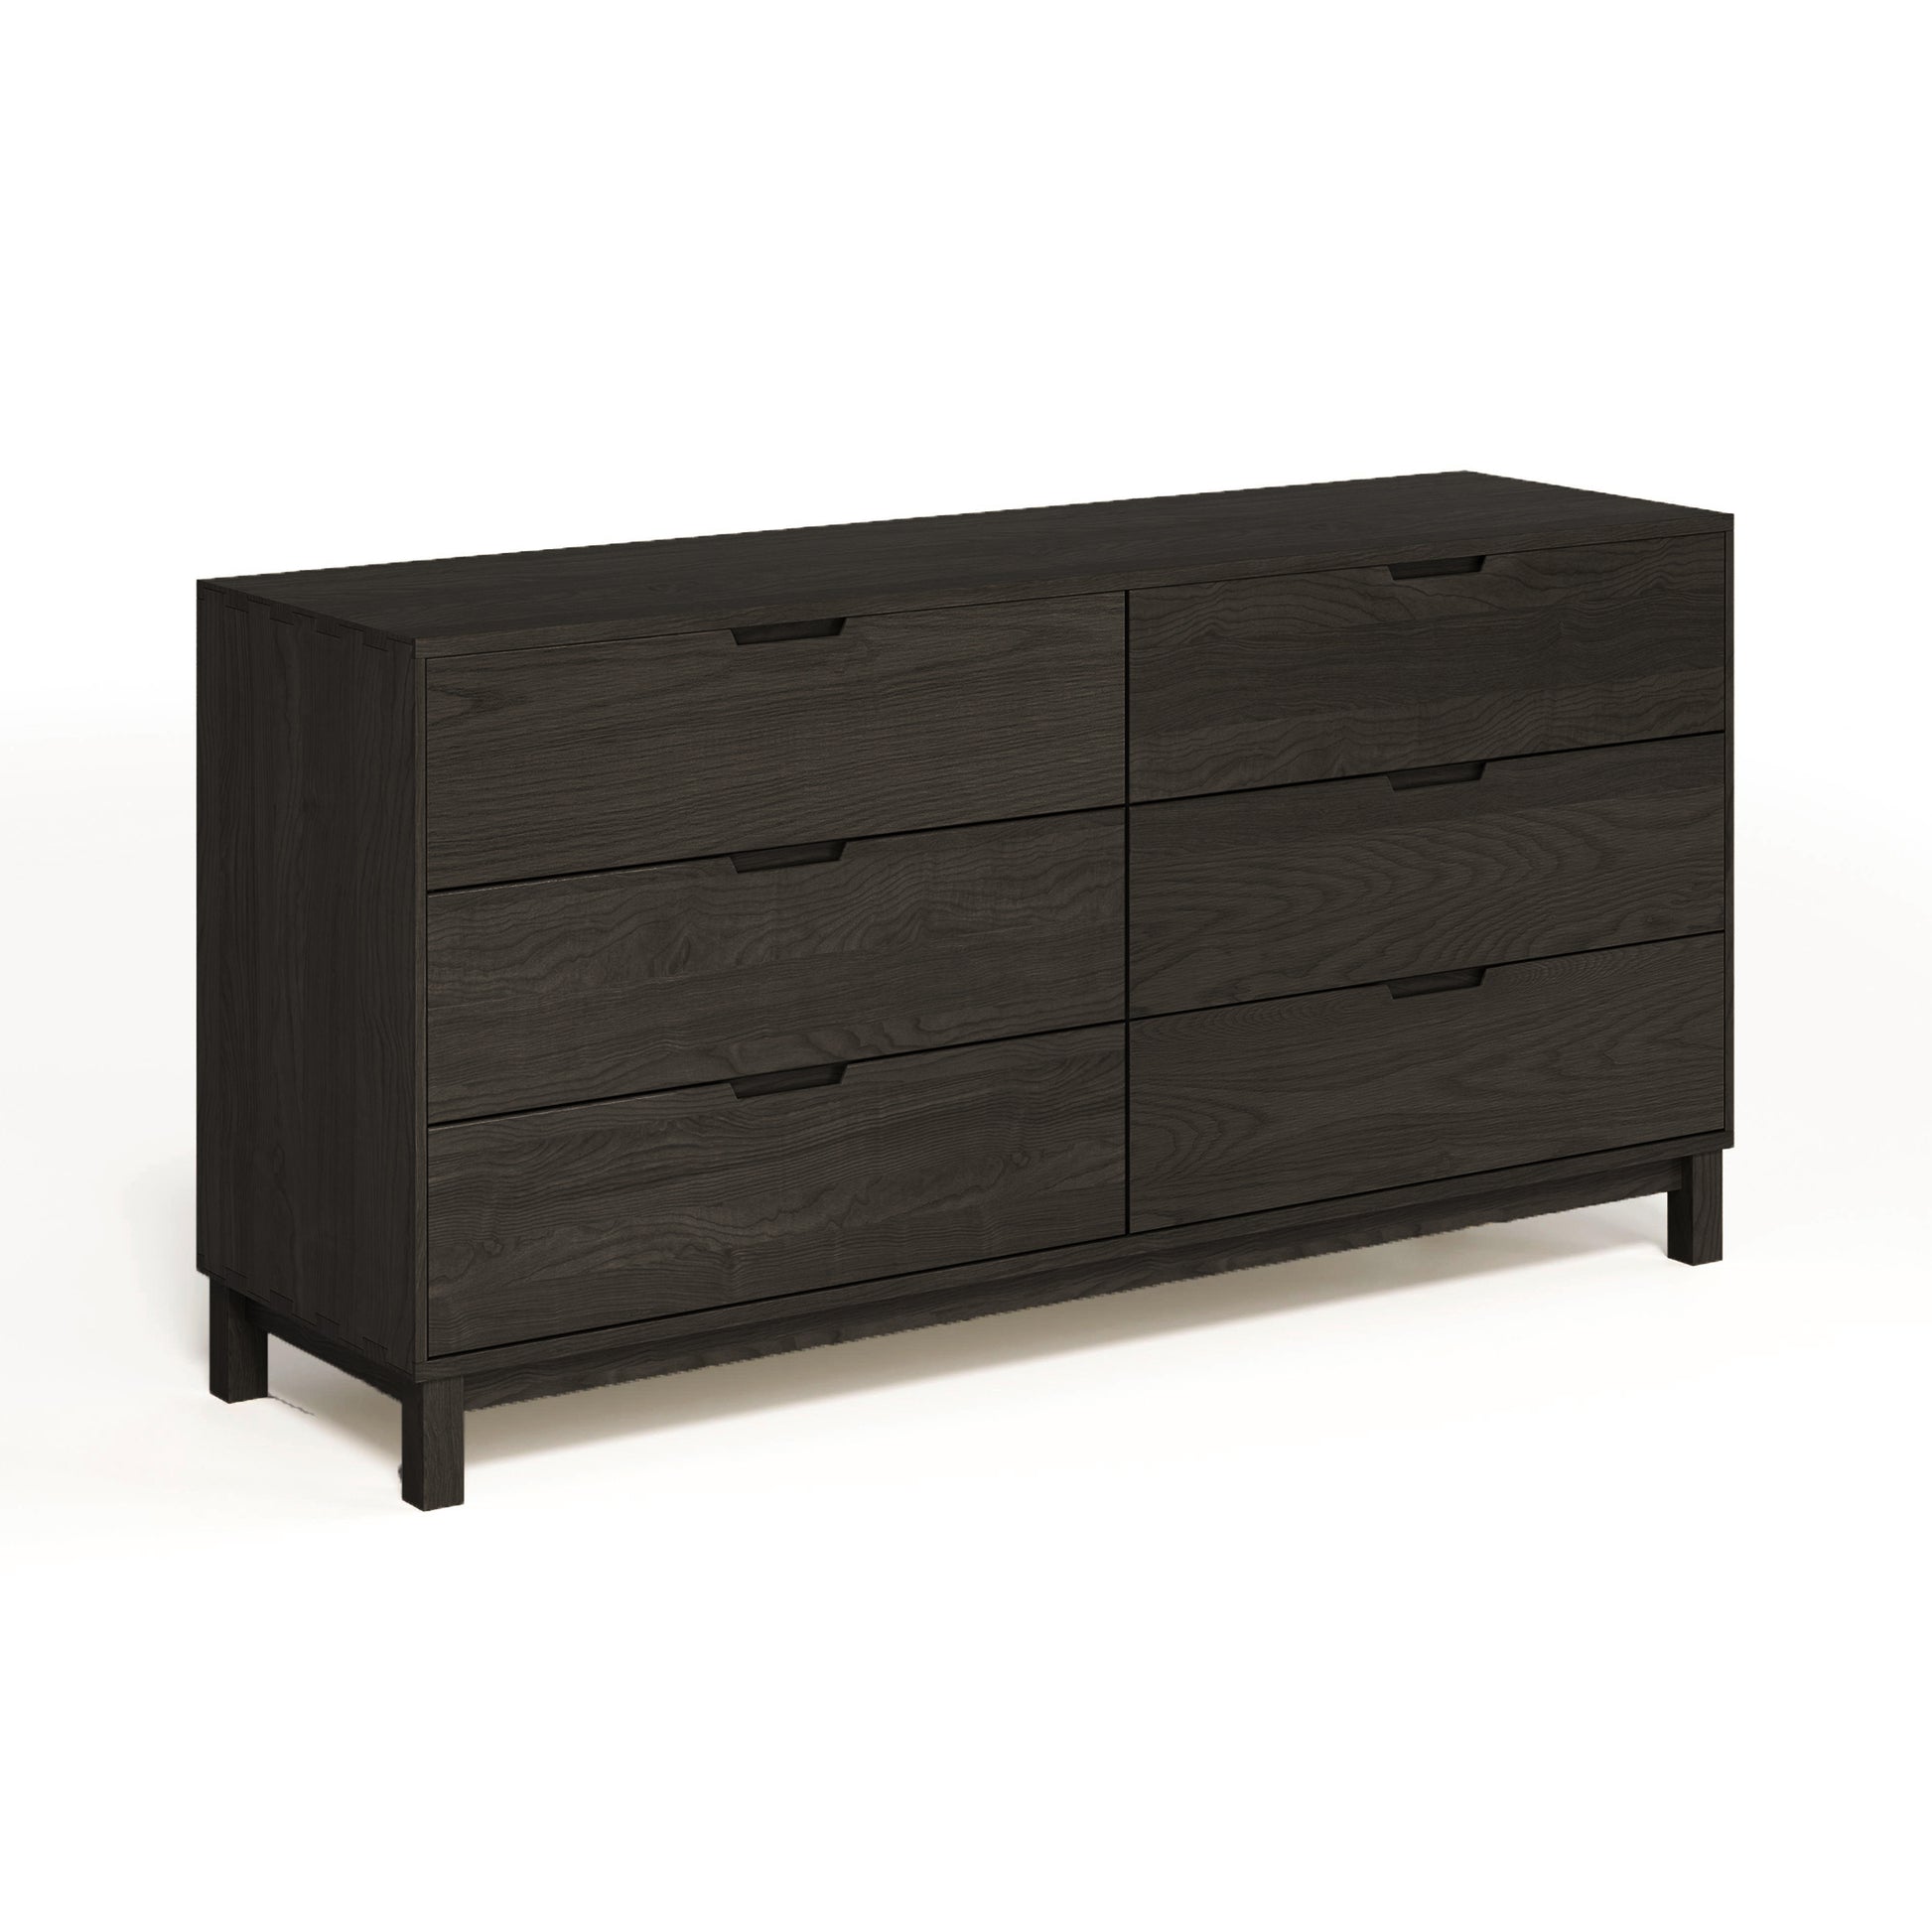 The Copeland Furniture Oslo 6-Drawer Dresser, made of solid natural oak hardwood, offers ample bedroom storage.